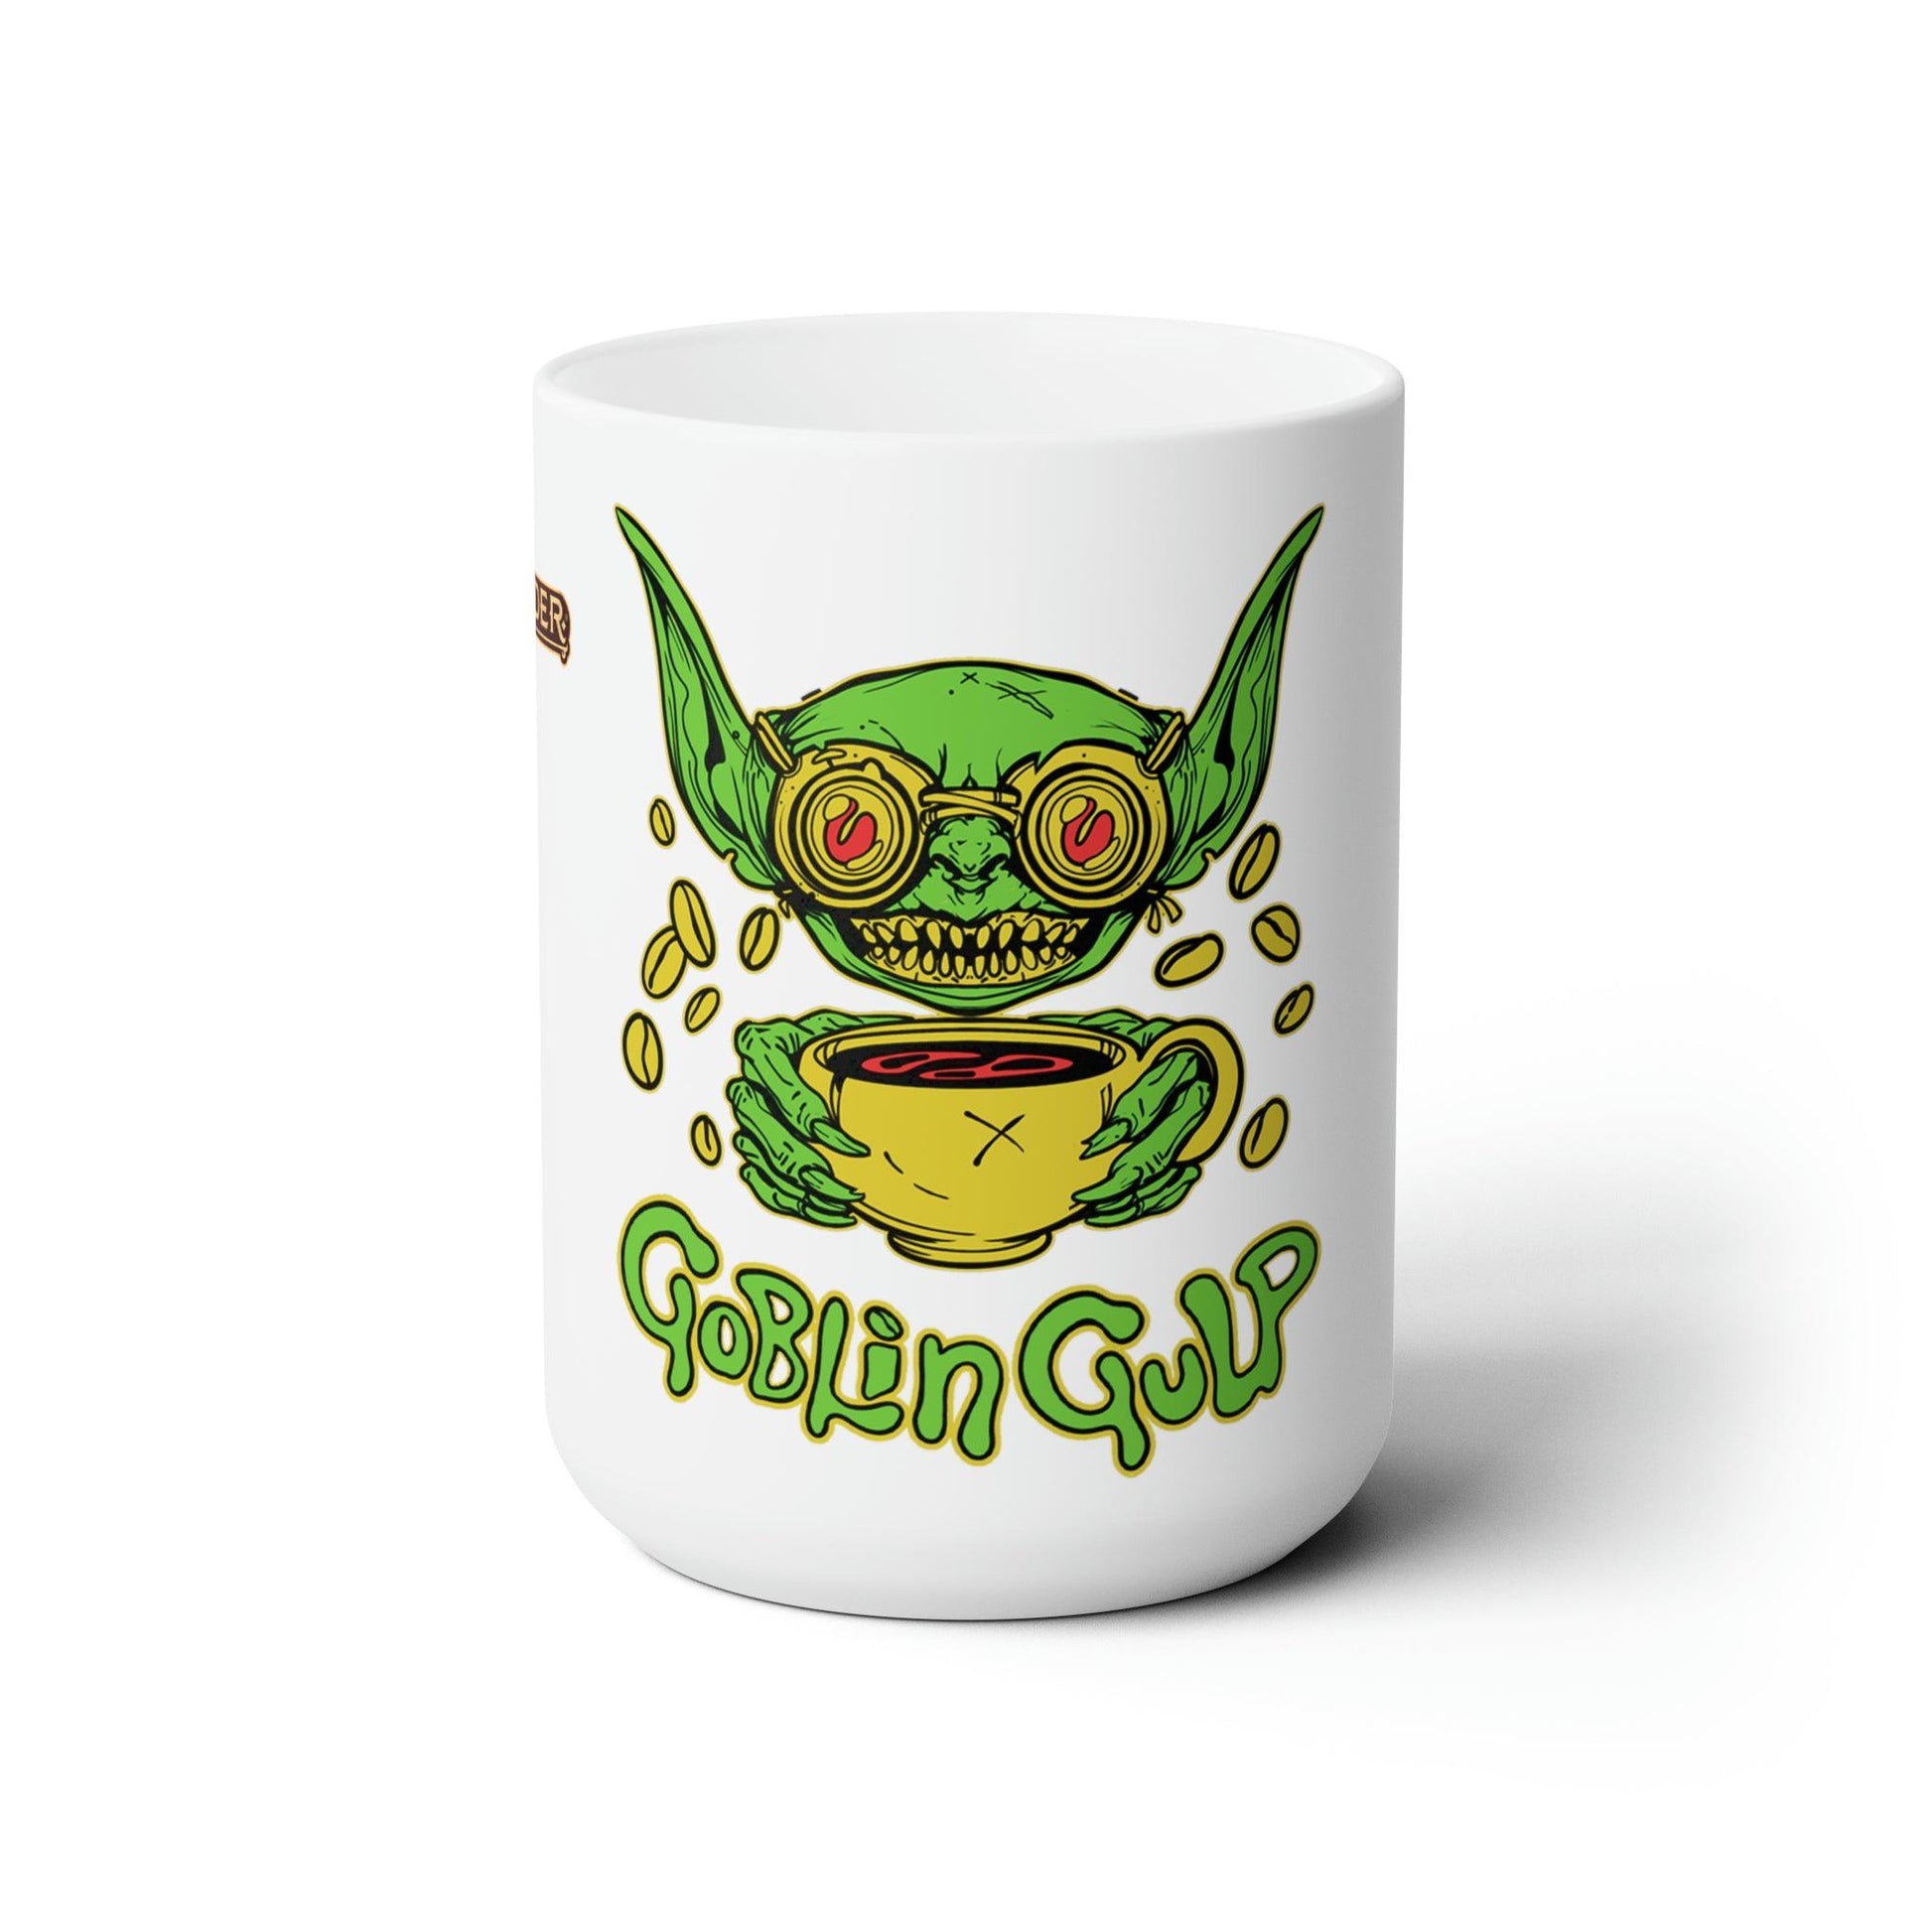 Goblin Gulp - Pathfinder Mug - Geek Grind Coffee